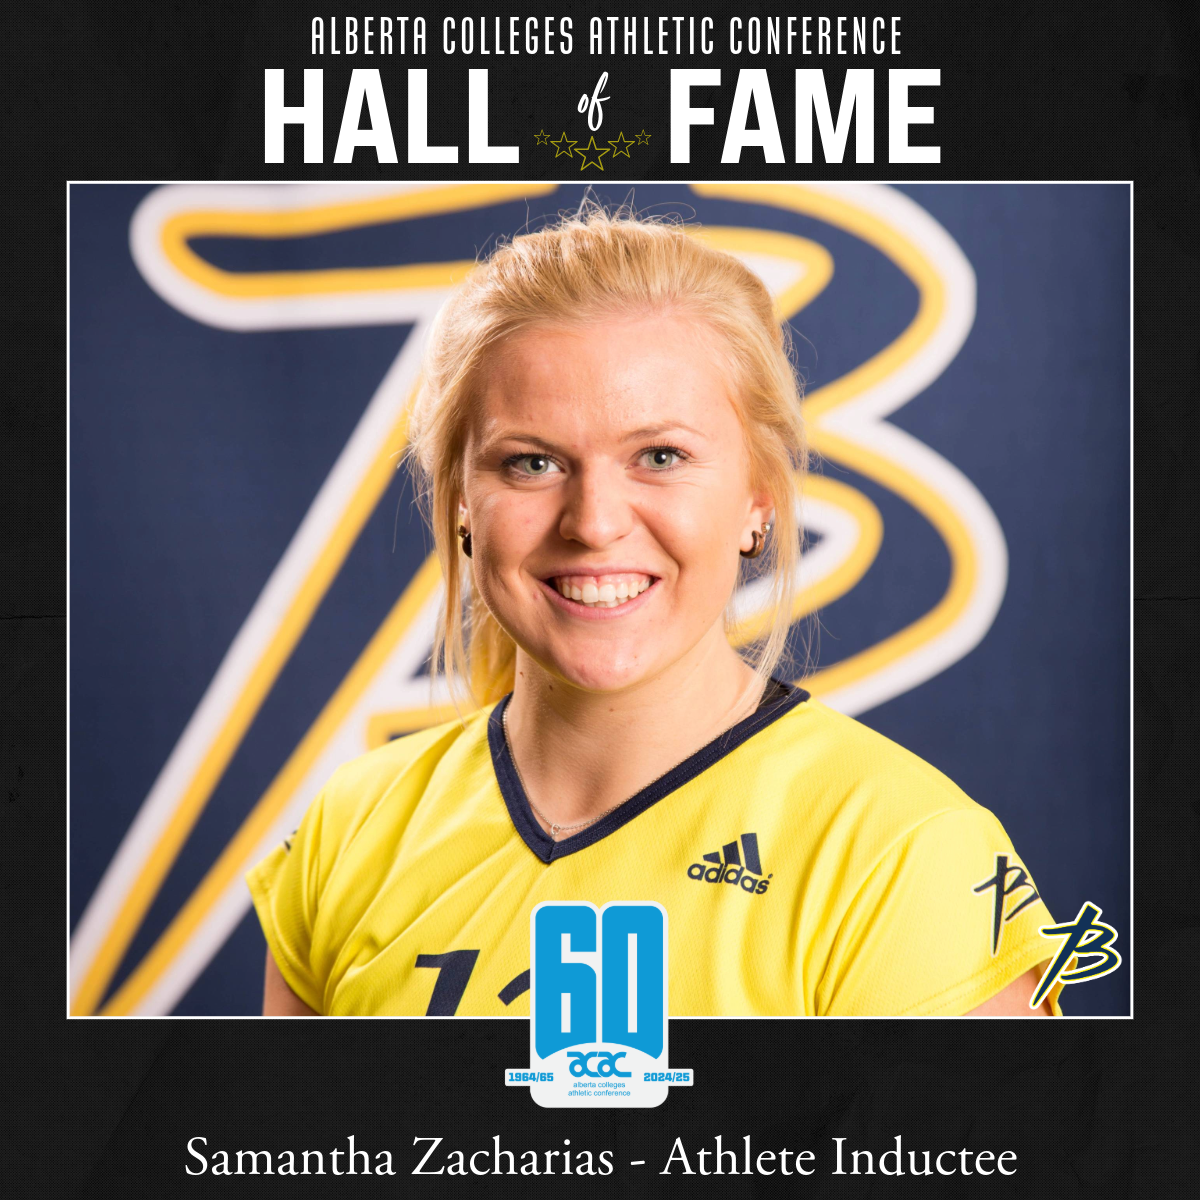 ACAC Hall of Fame Athlete Inductee: Samantha Zacharias